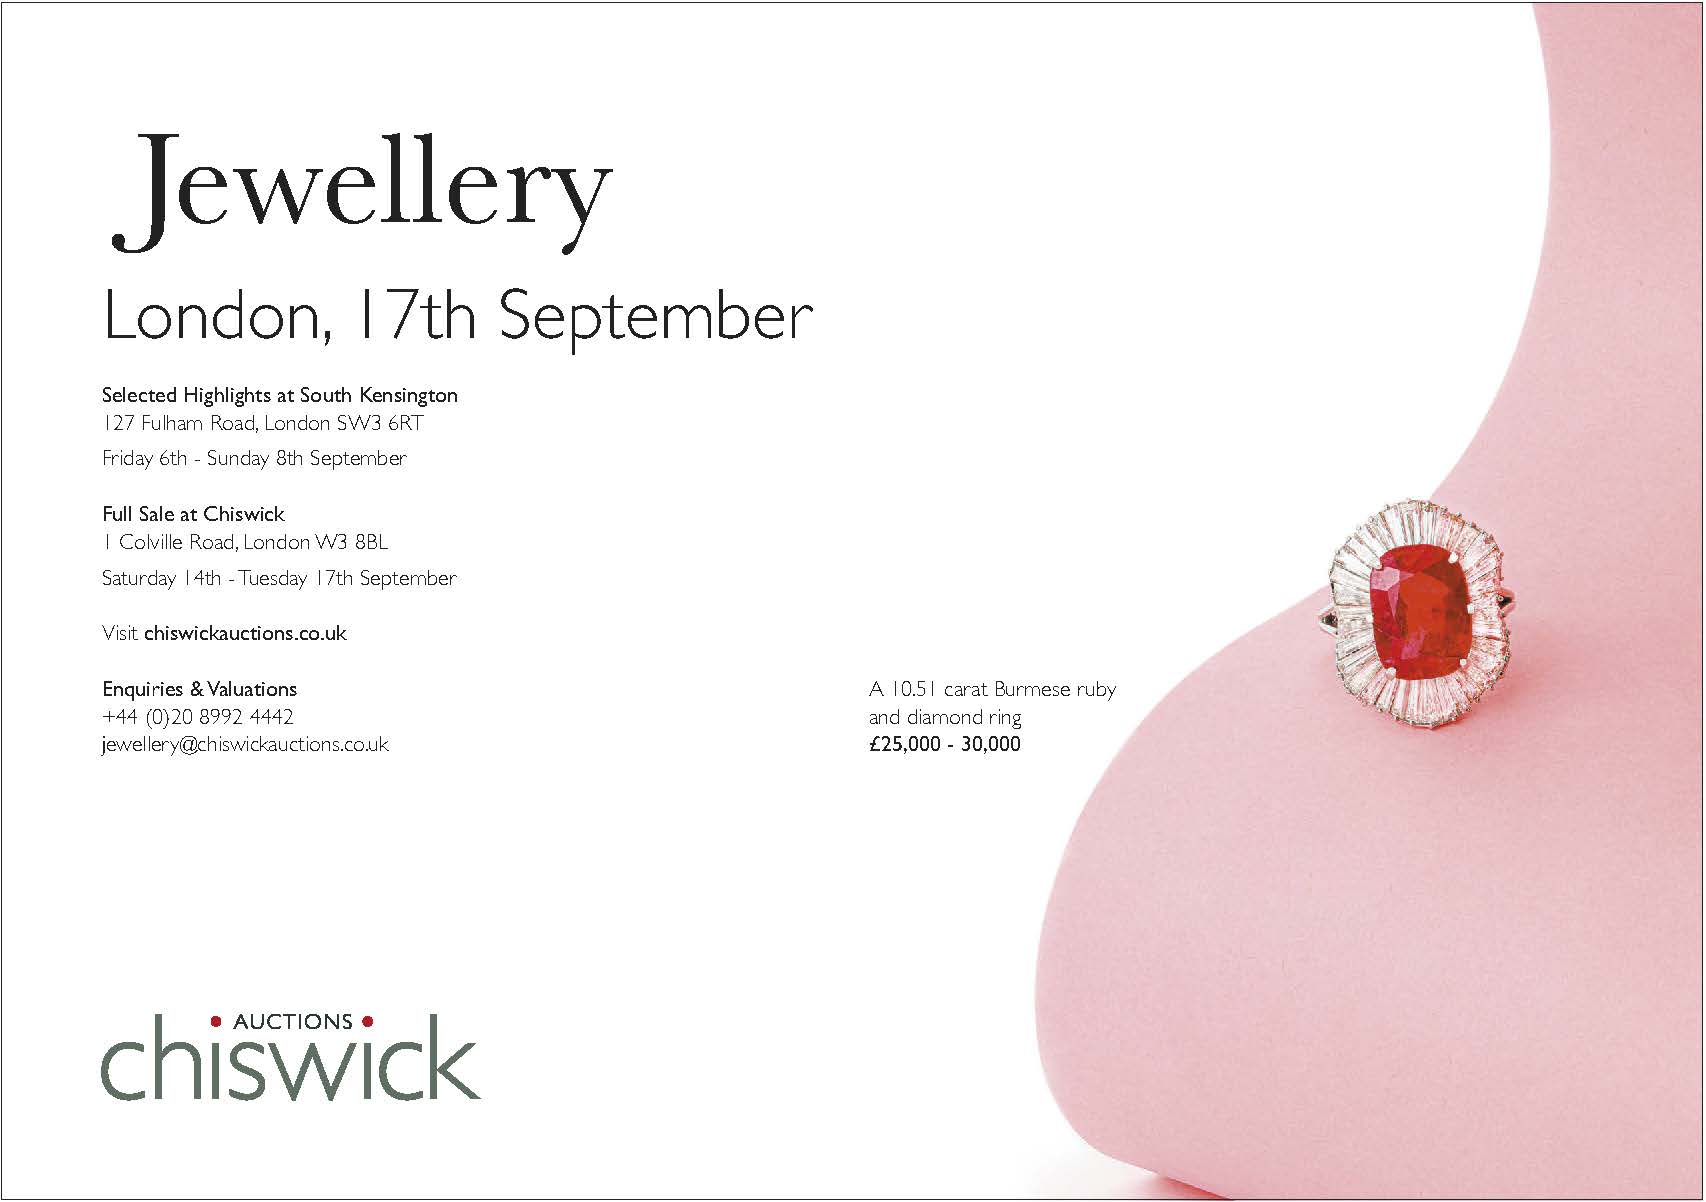 Chiswick - Jewellery.jpg